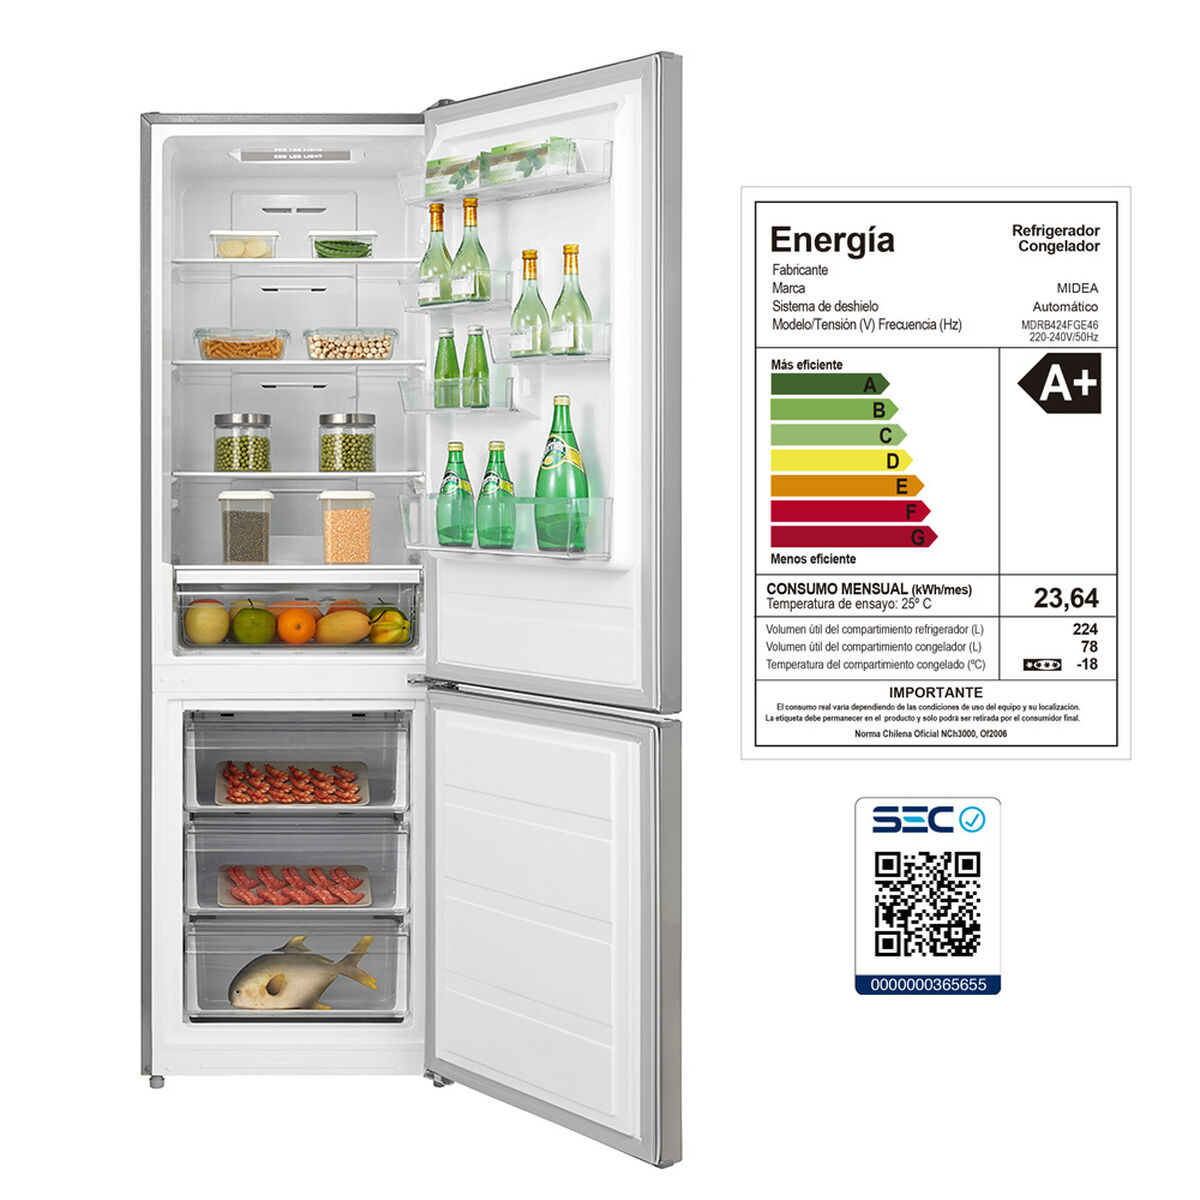 Supone Denso Facilitar Refrigerador No Frost Midea MDRB424FGE46 302 lts. | laPolar.cl